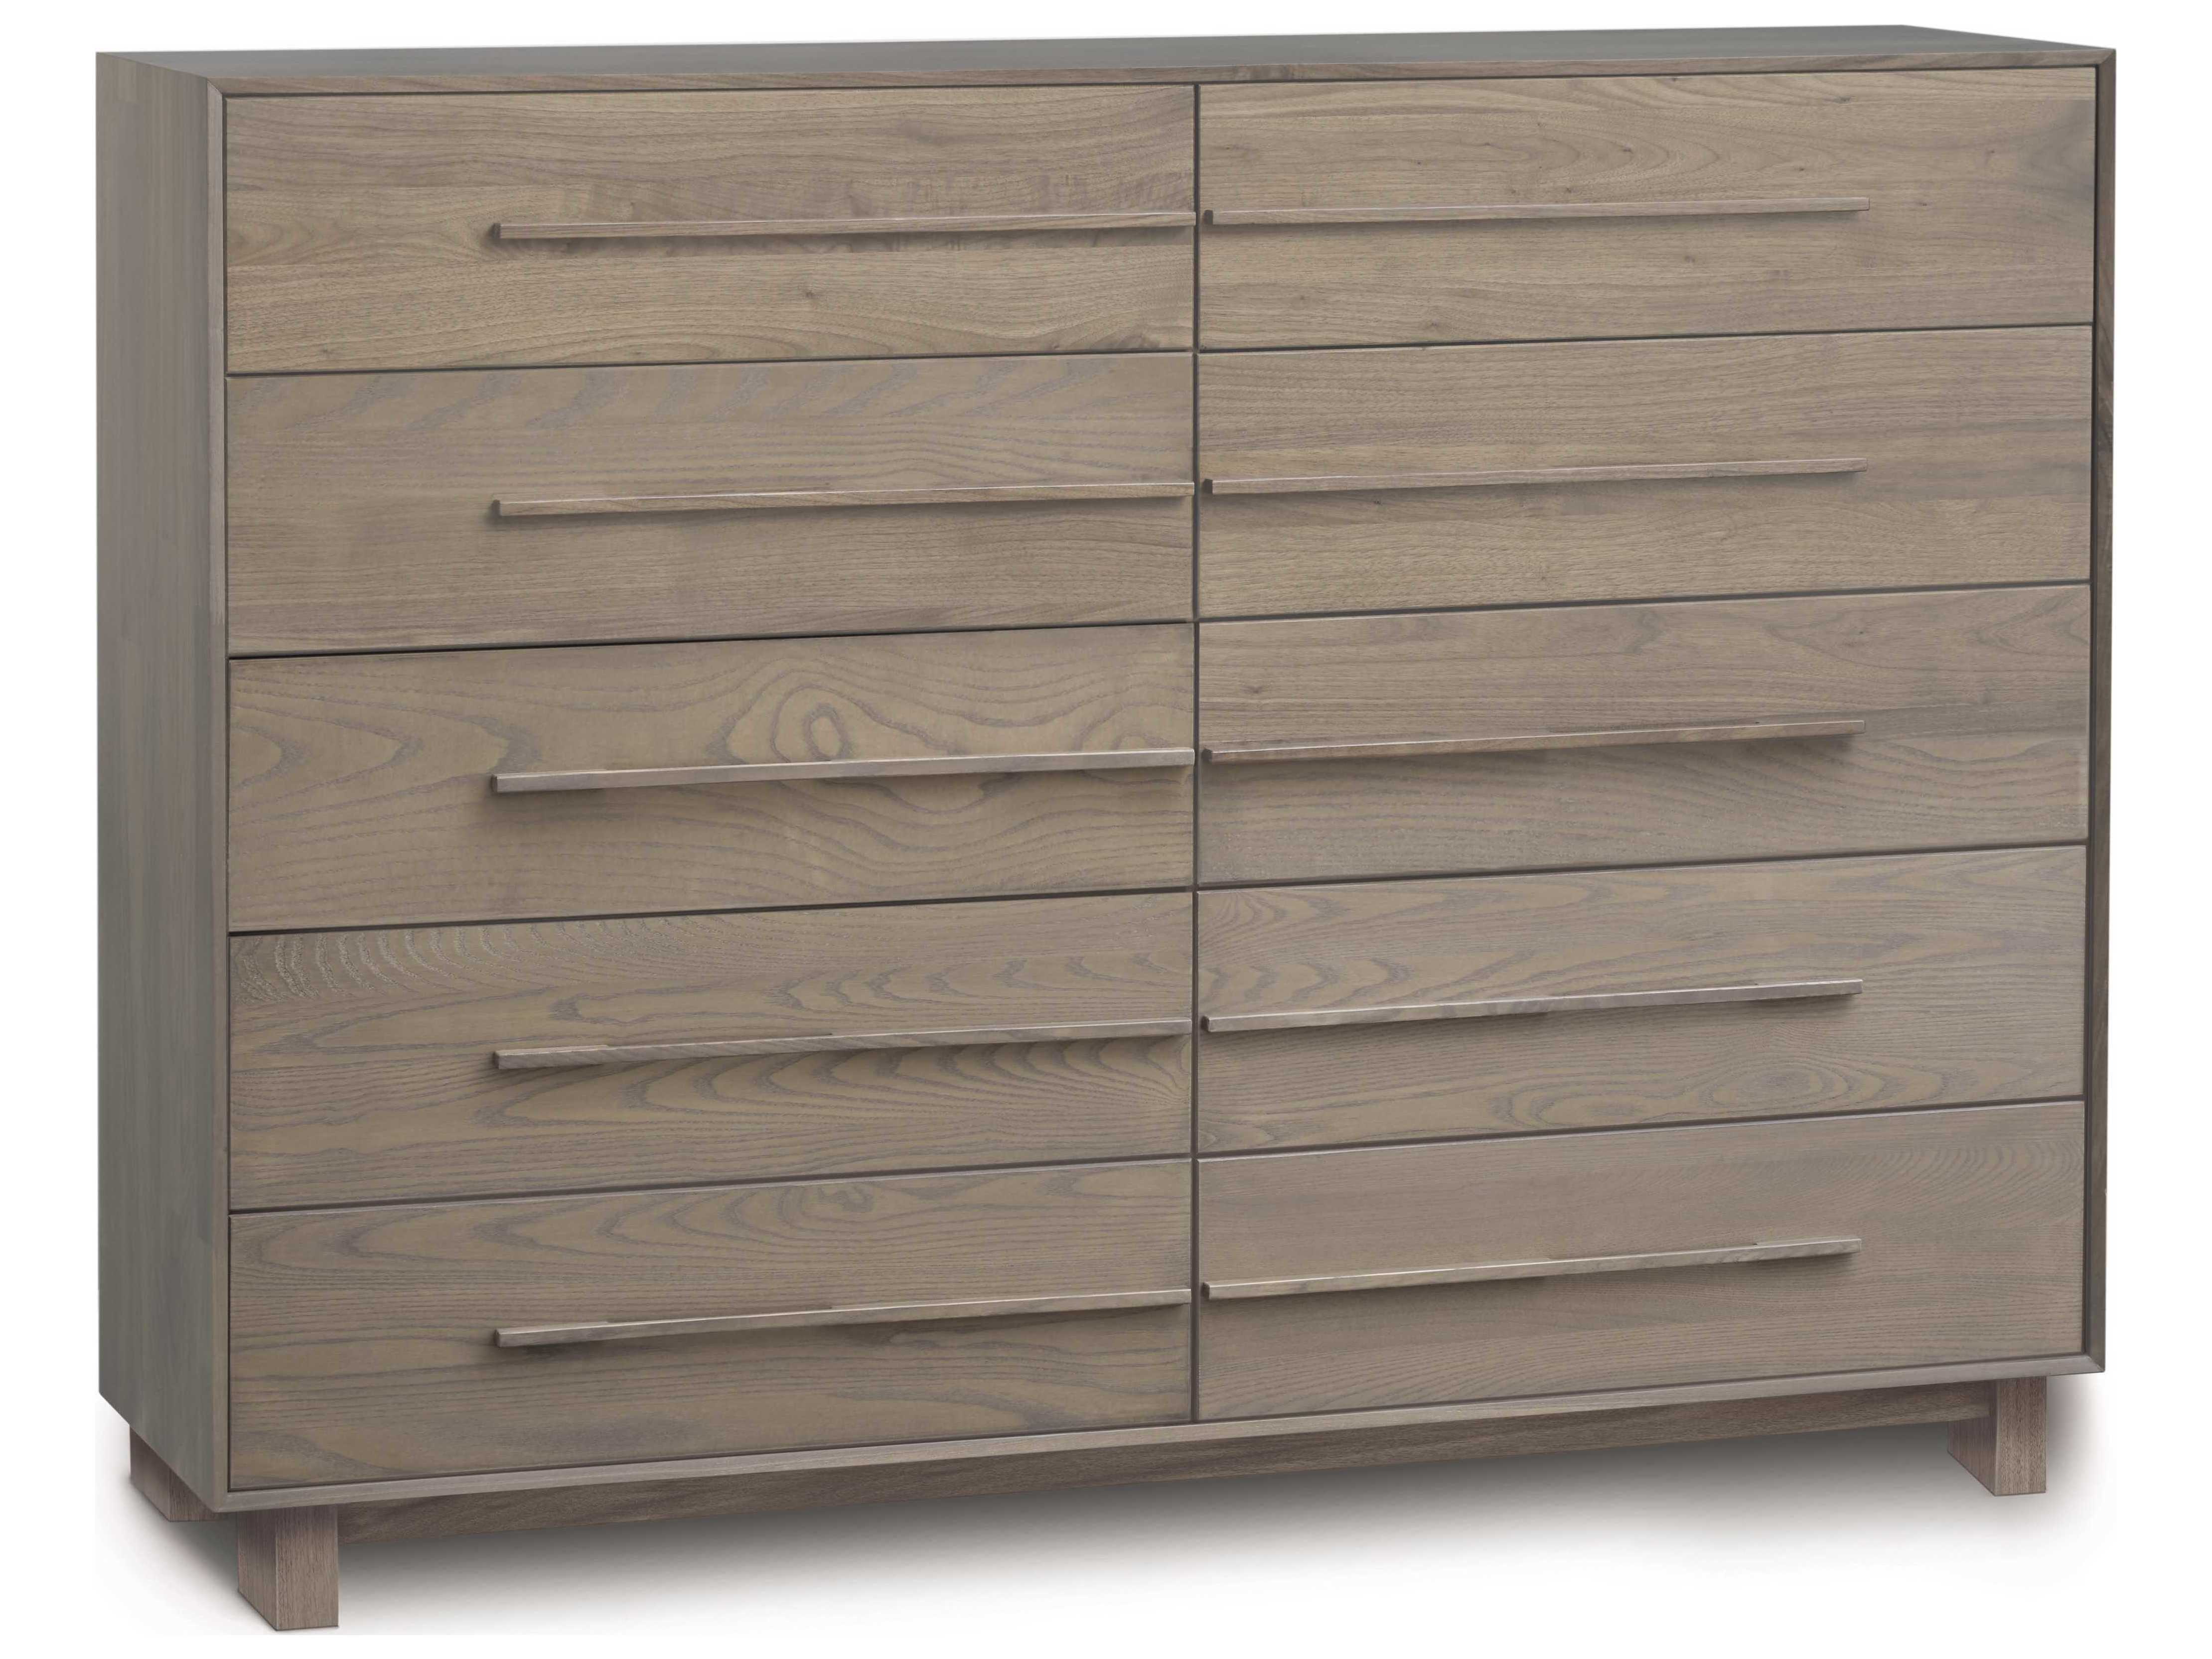 Copeland Furniture Sloane Ten Drawer Double Dresser Cf2slo90